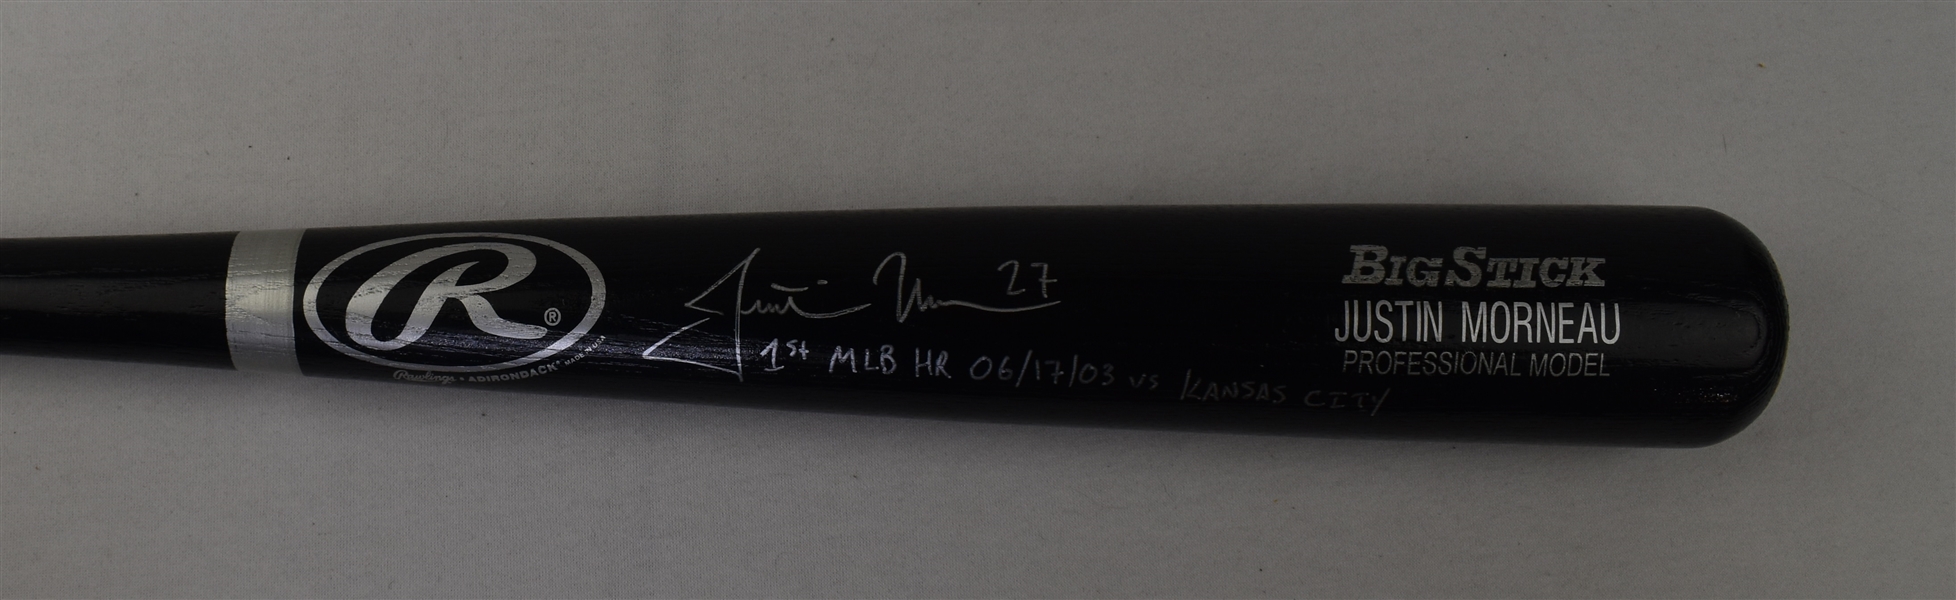 Justin Morneau Autographed & Inscribed Bat